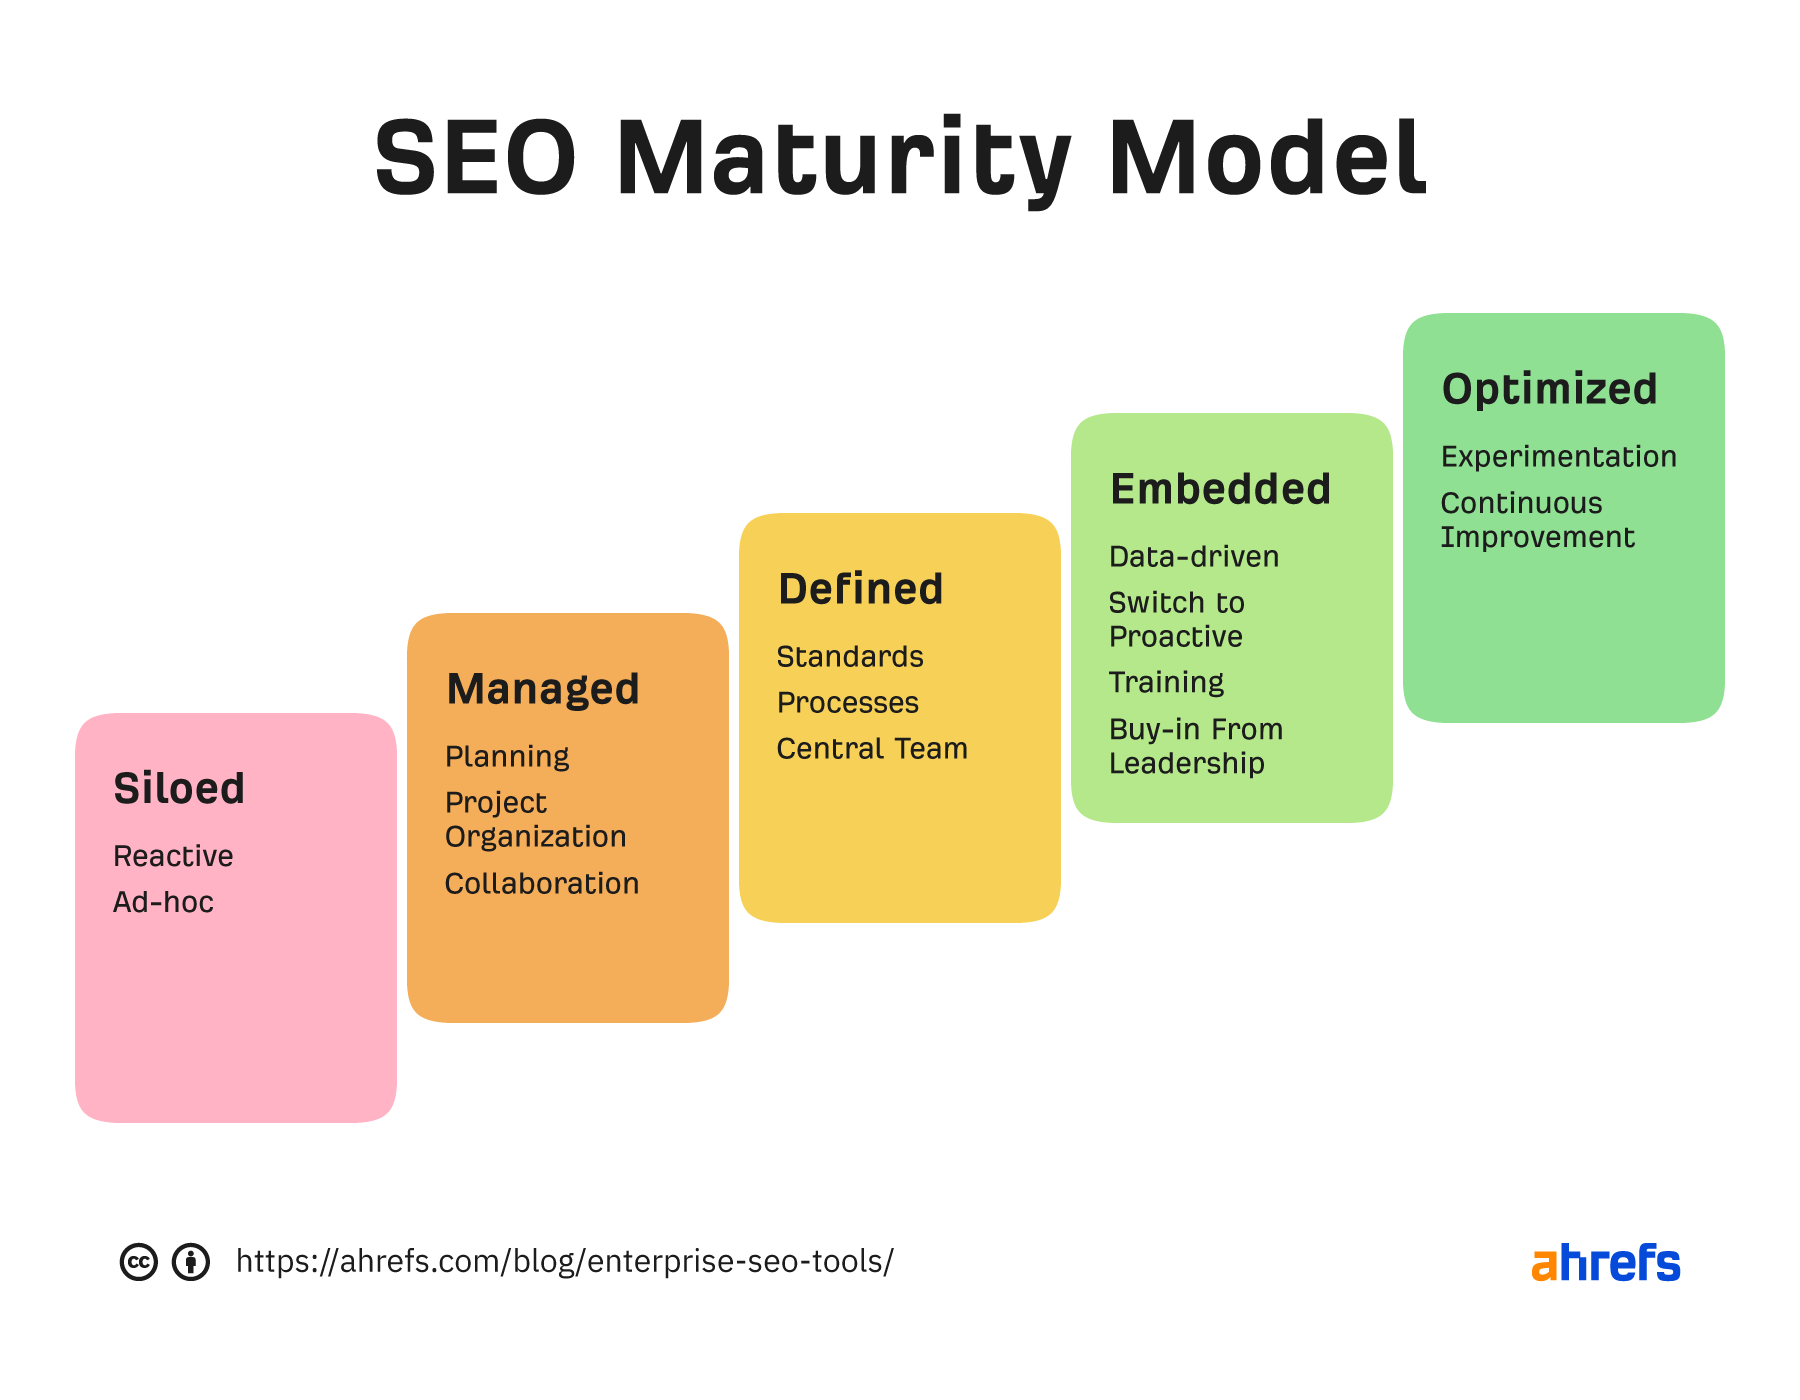 Enterprise SEO maturity model